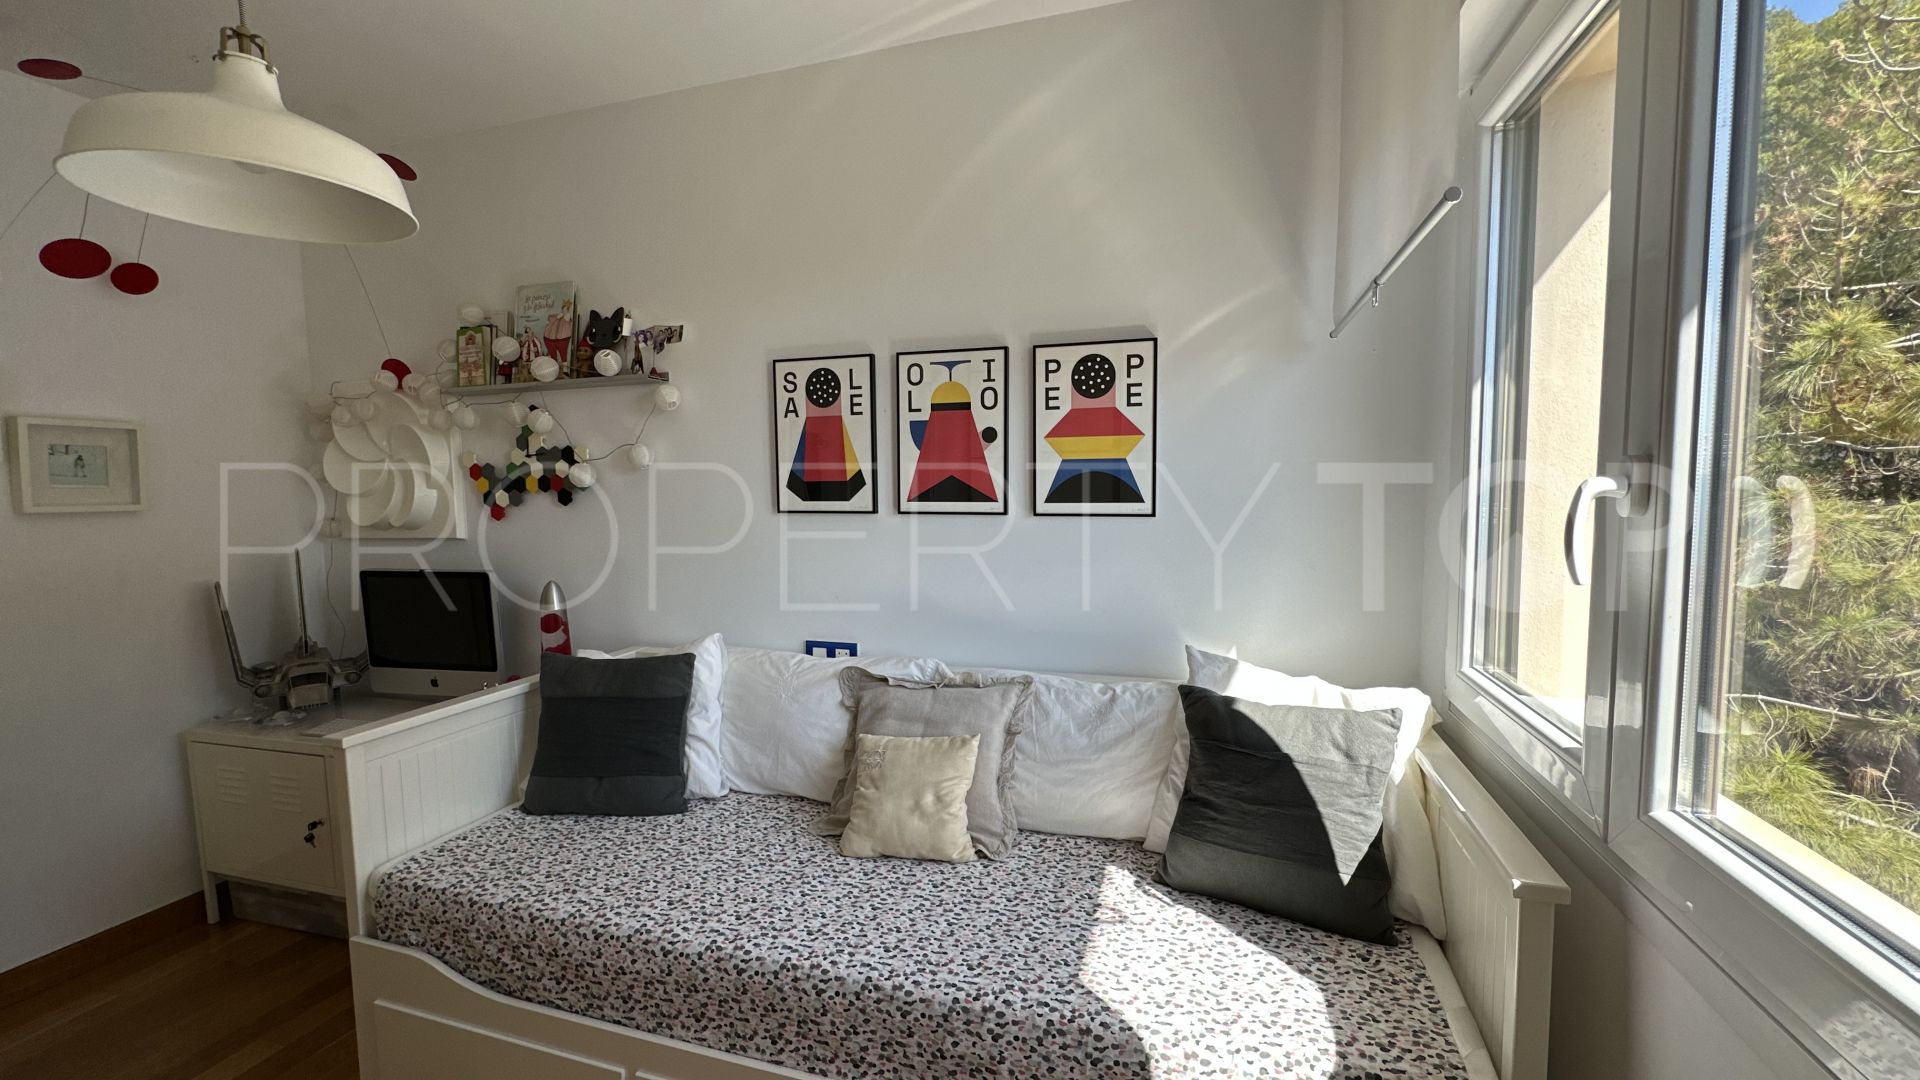 3 bedrooms flat in Malaga - Este for sale